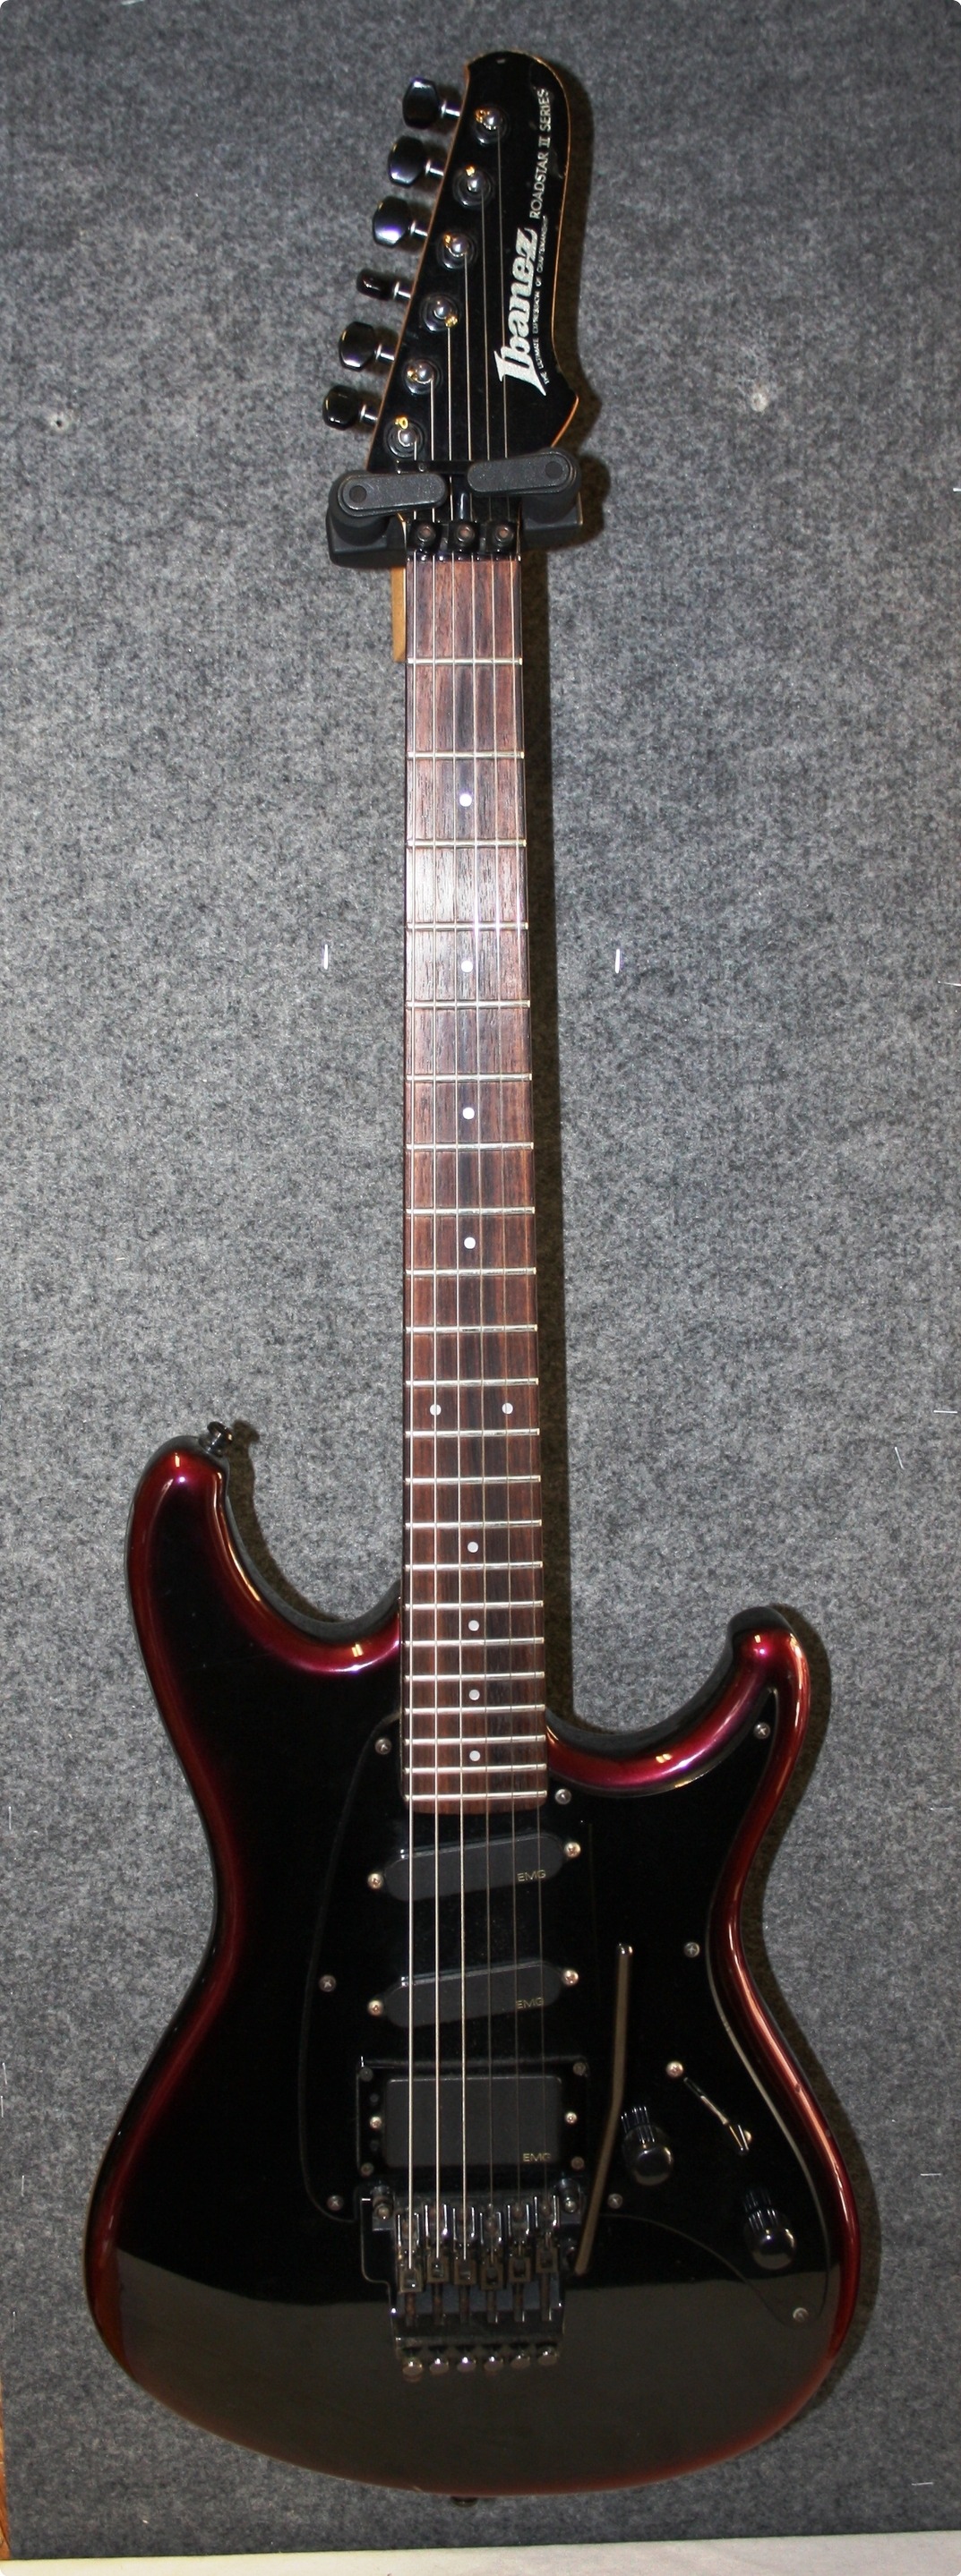 Ibanez (Japan) Roadstar II 1986 Purple Metallic Burst Guitar